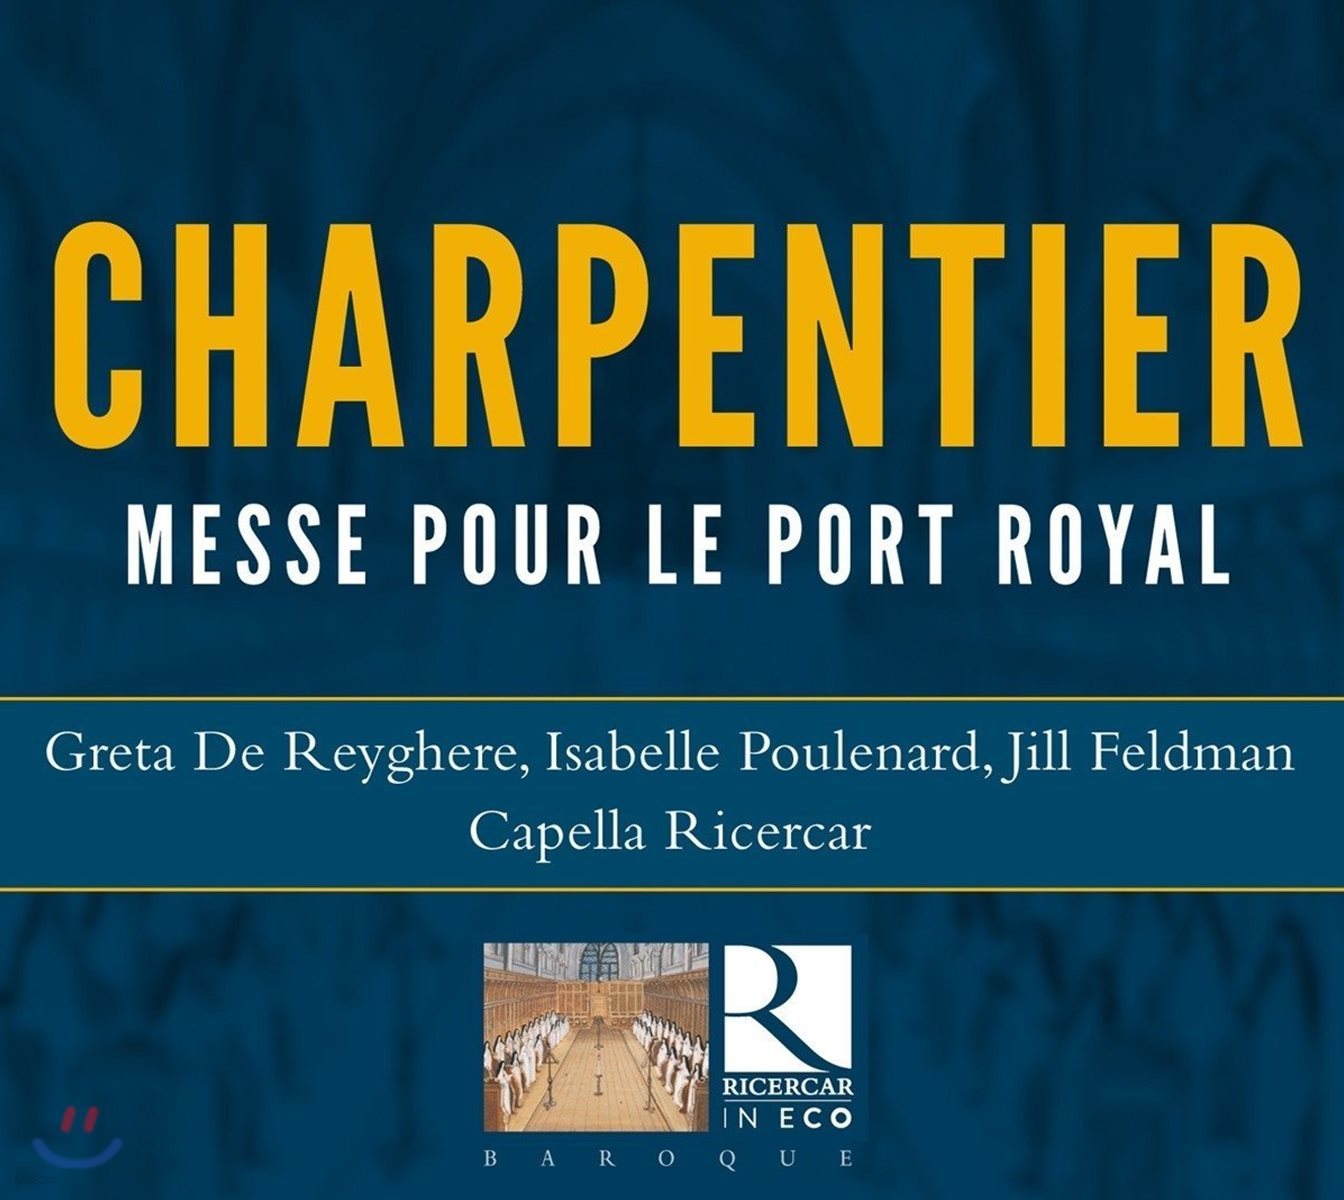 Capella Ricercar 샤르팡티에: 포르루아얄을 위한 미사 (Charpentier: Messe pour le Port Royal)